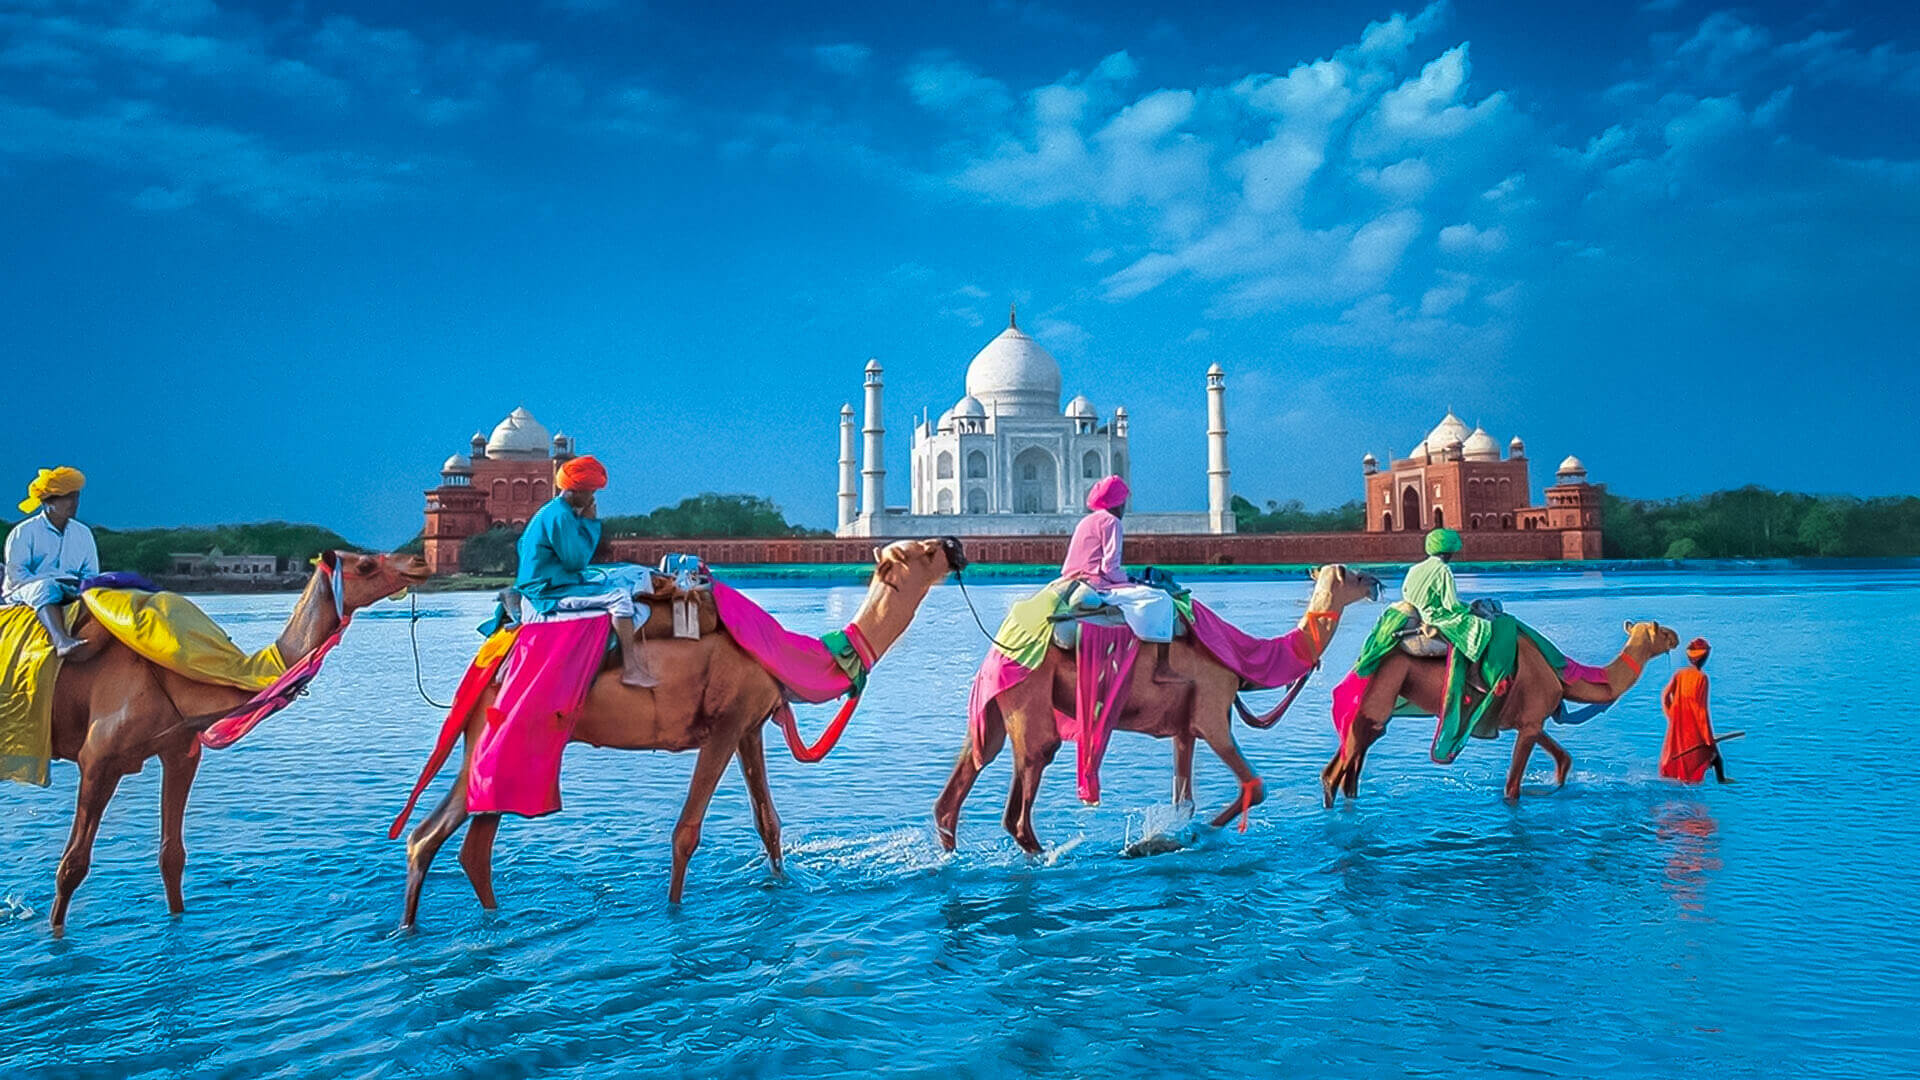 India travel guide - Travel S helper